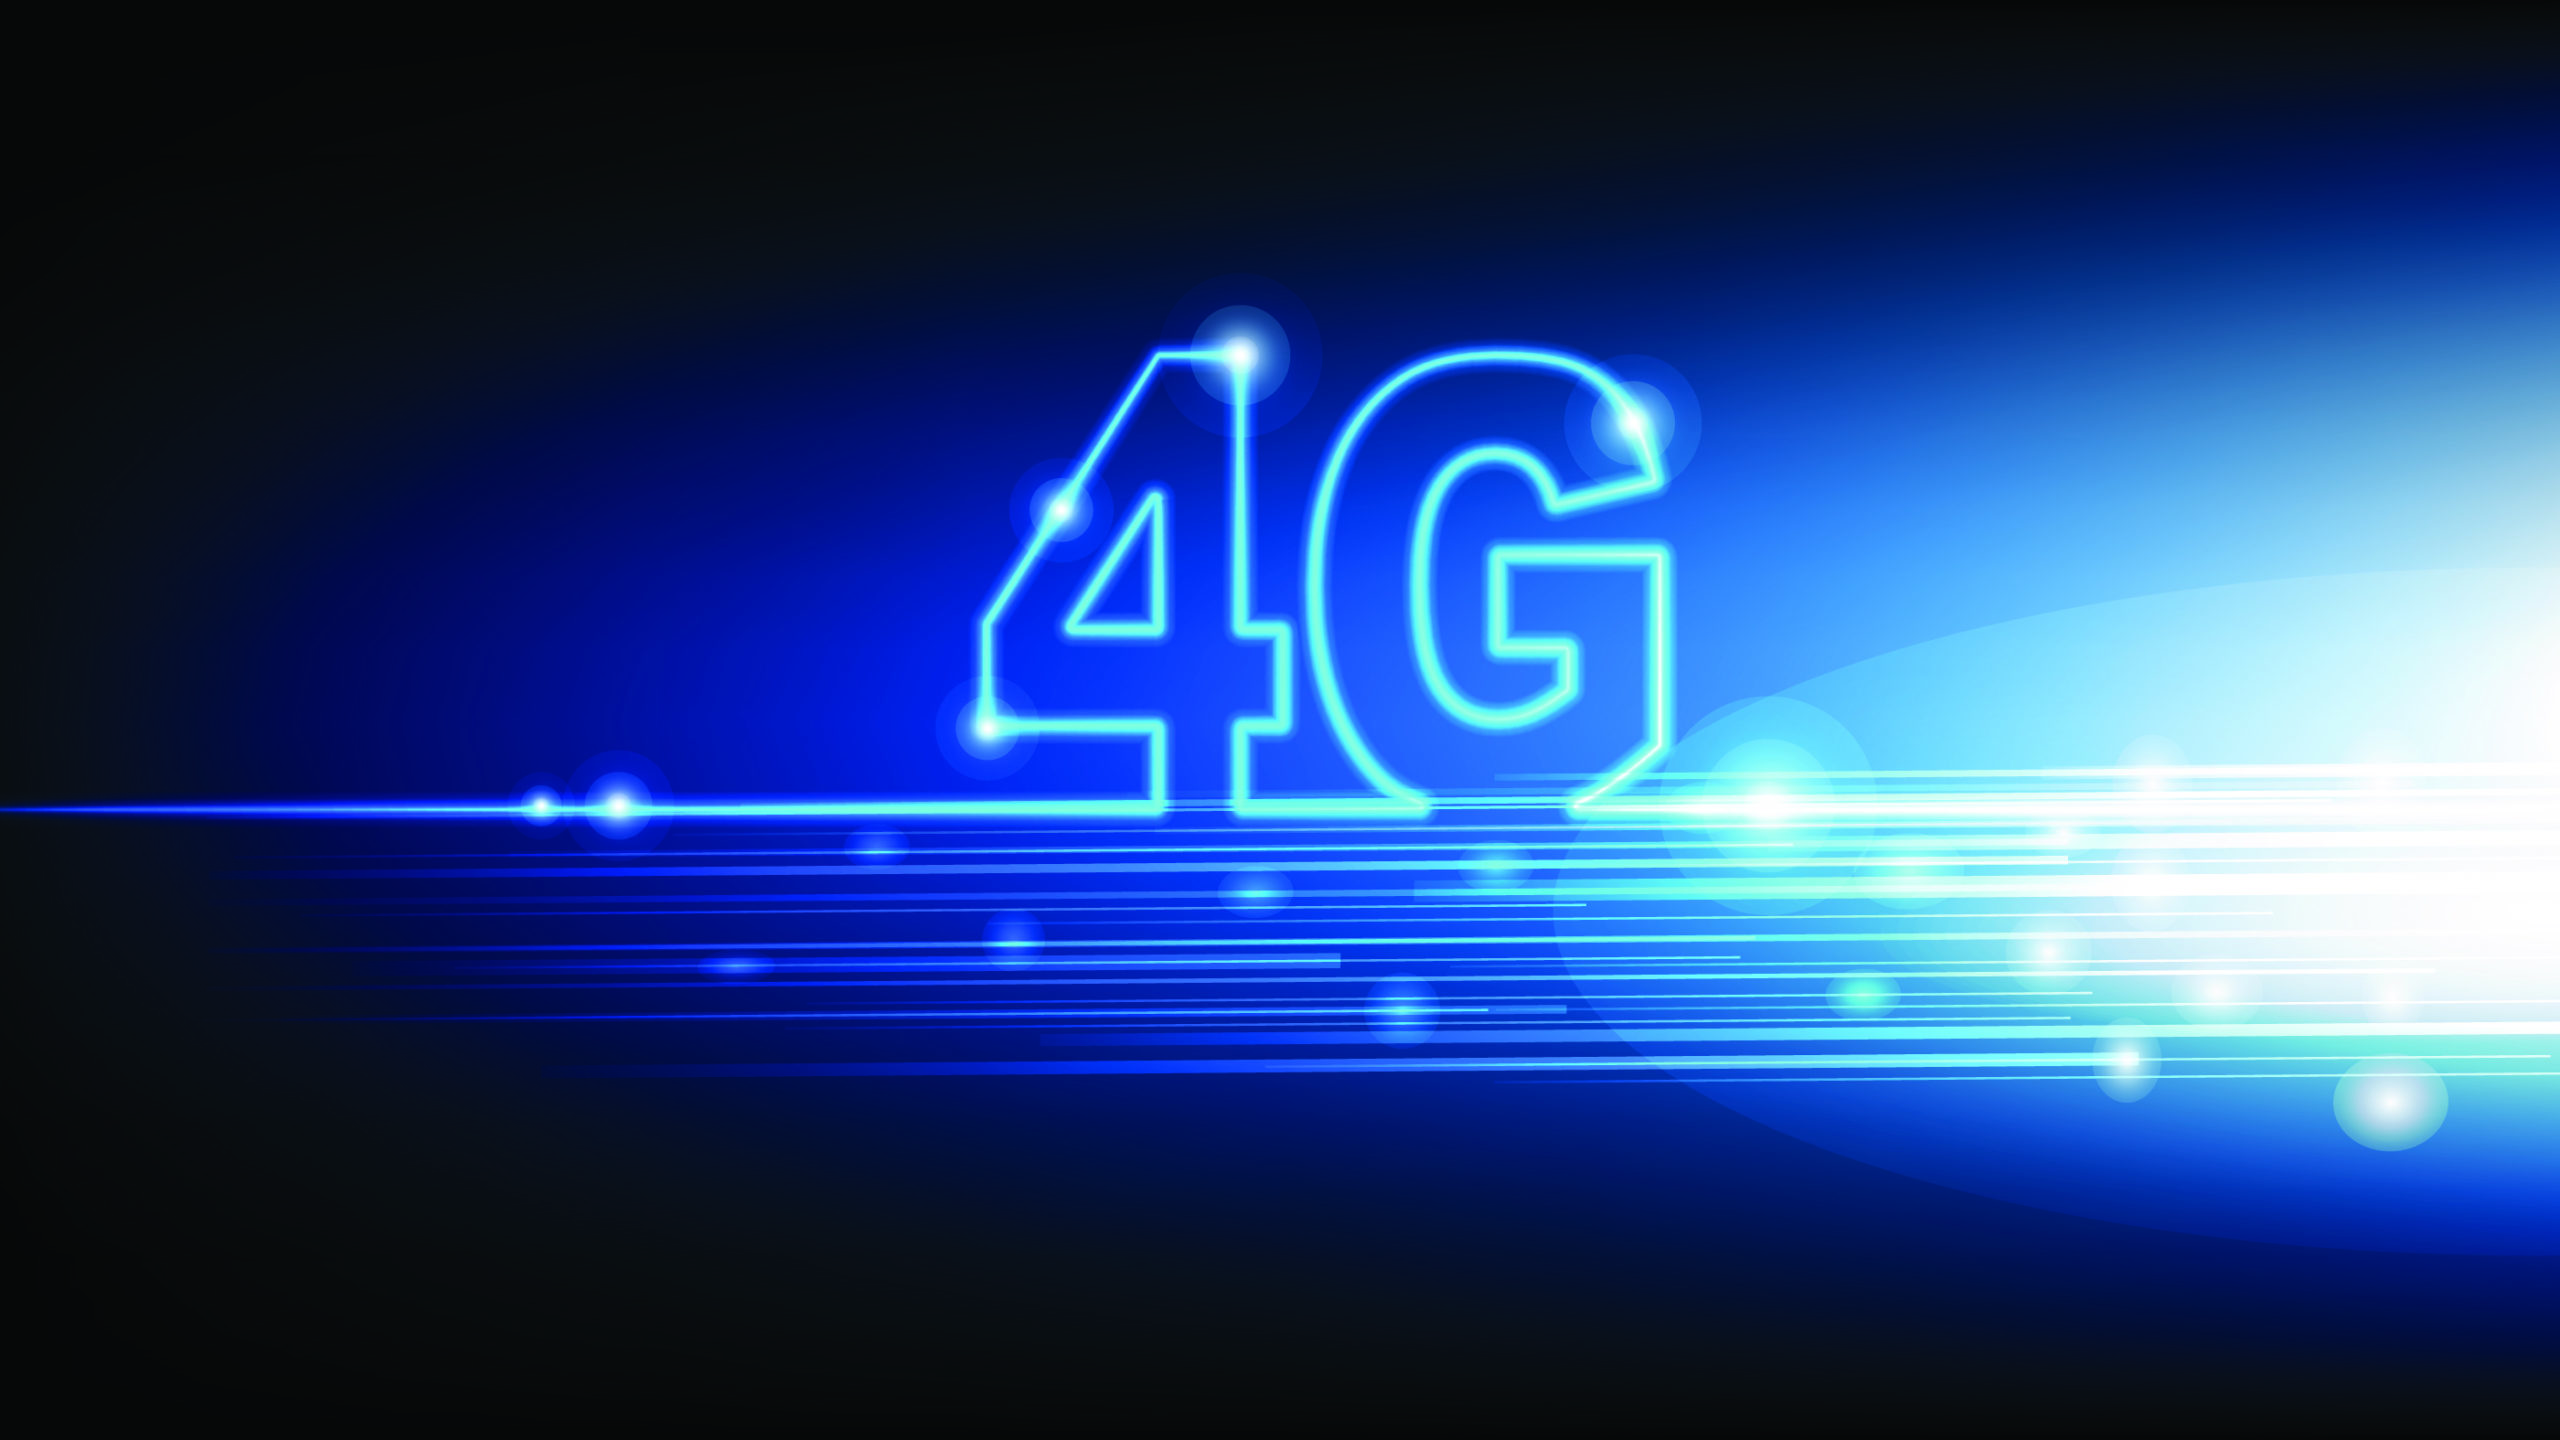 Generic 4G logo